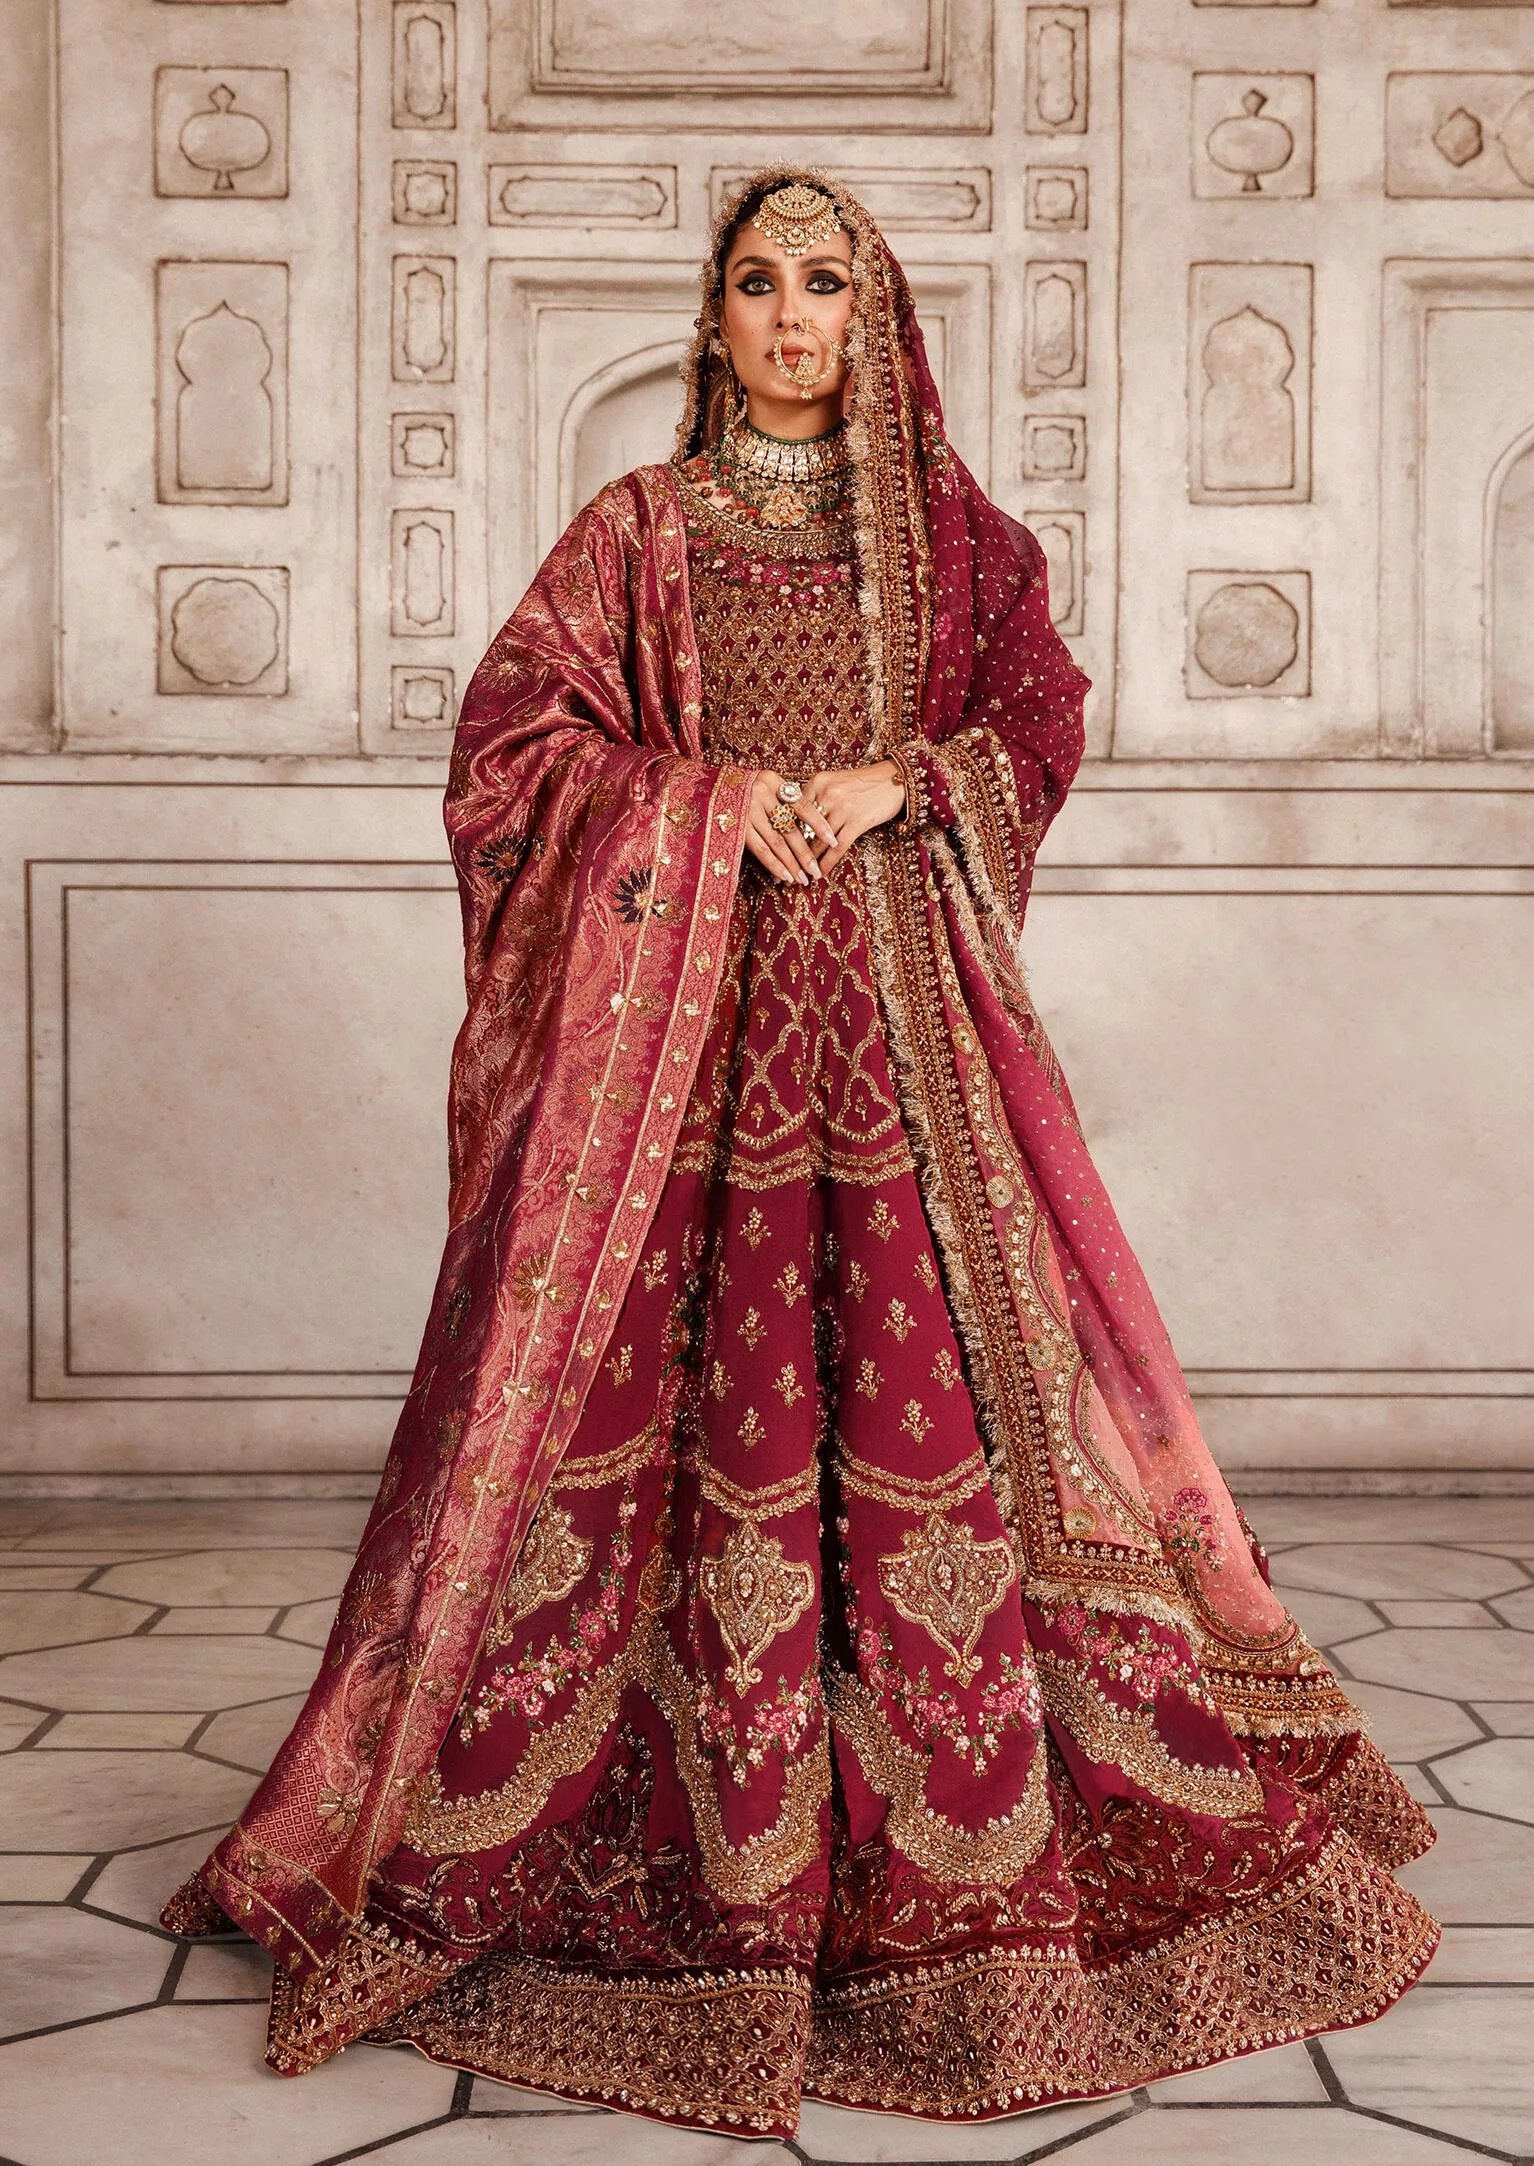 25+ Amazing Wedding Haldi Ceremony Dress collection ll beautiful Haldi  dress ideas for brides - YouTube